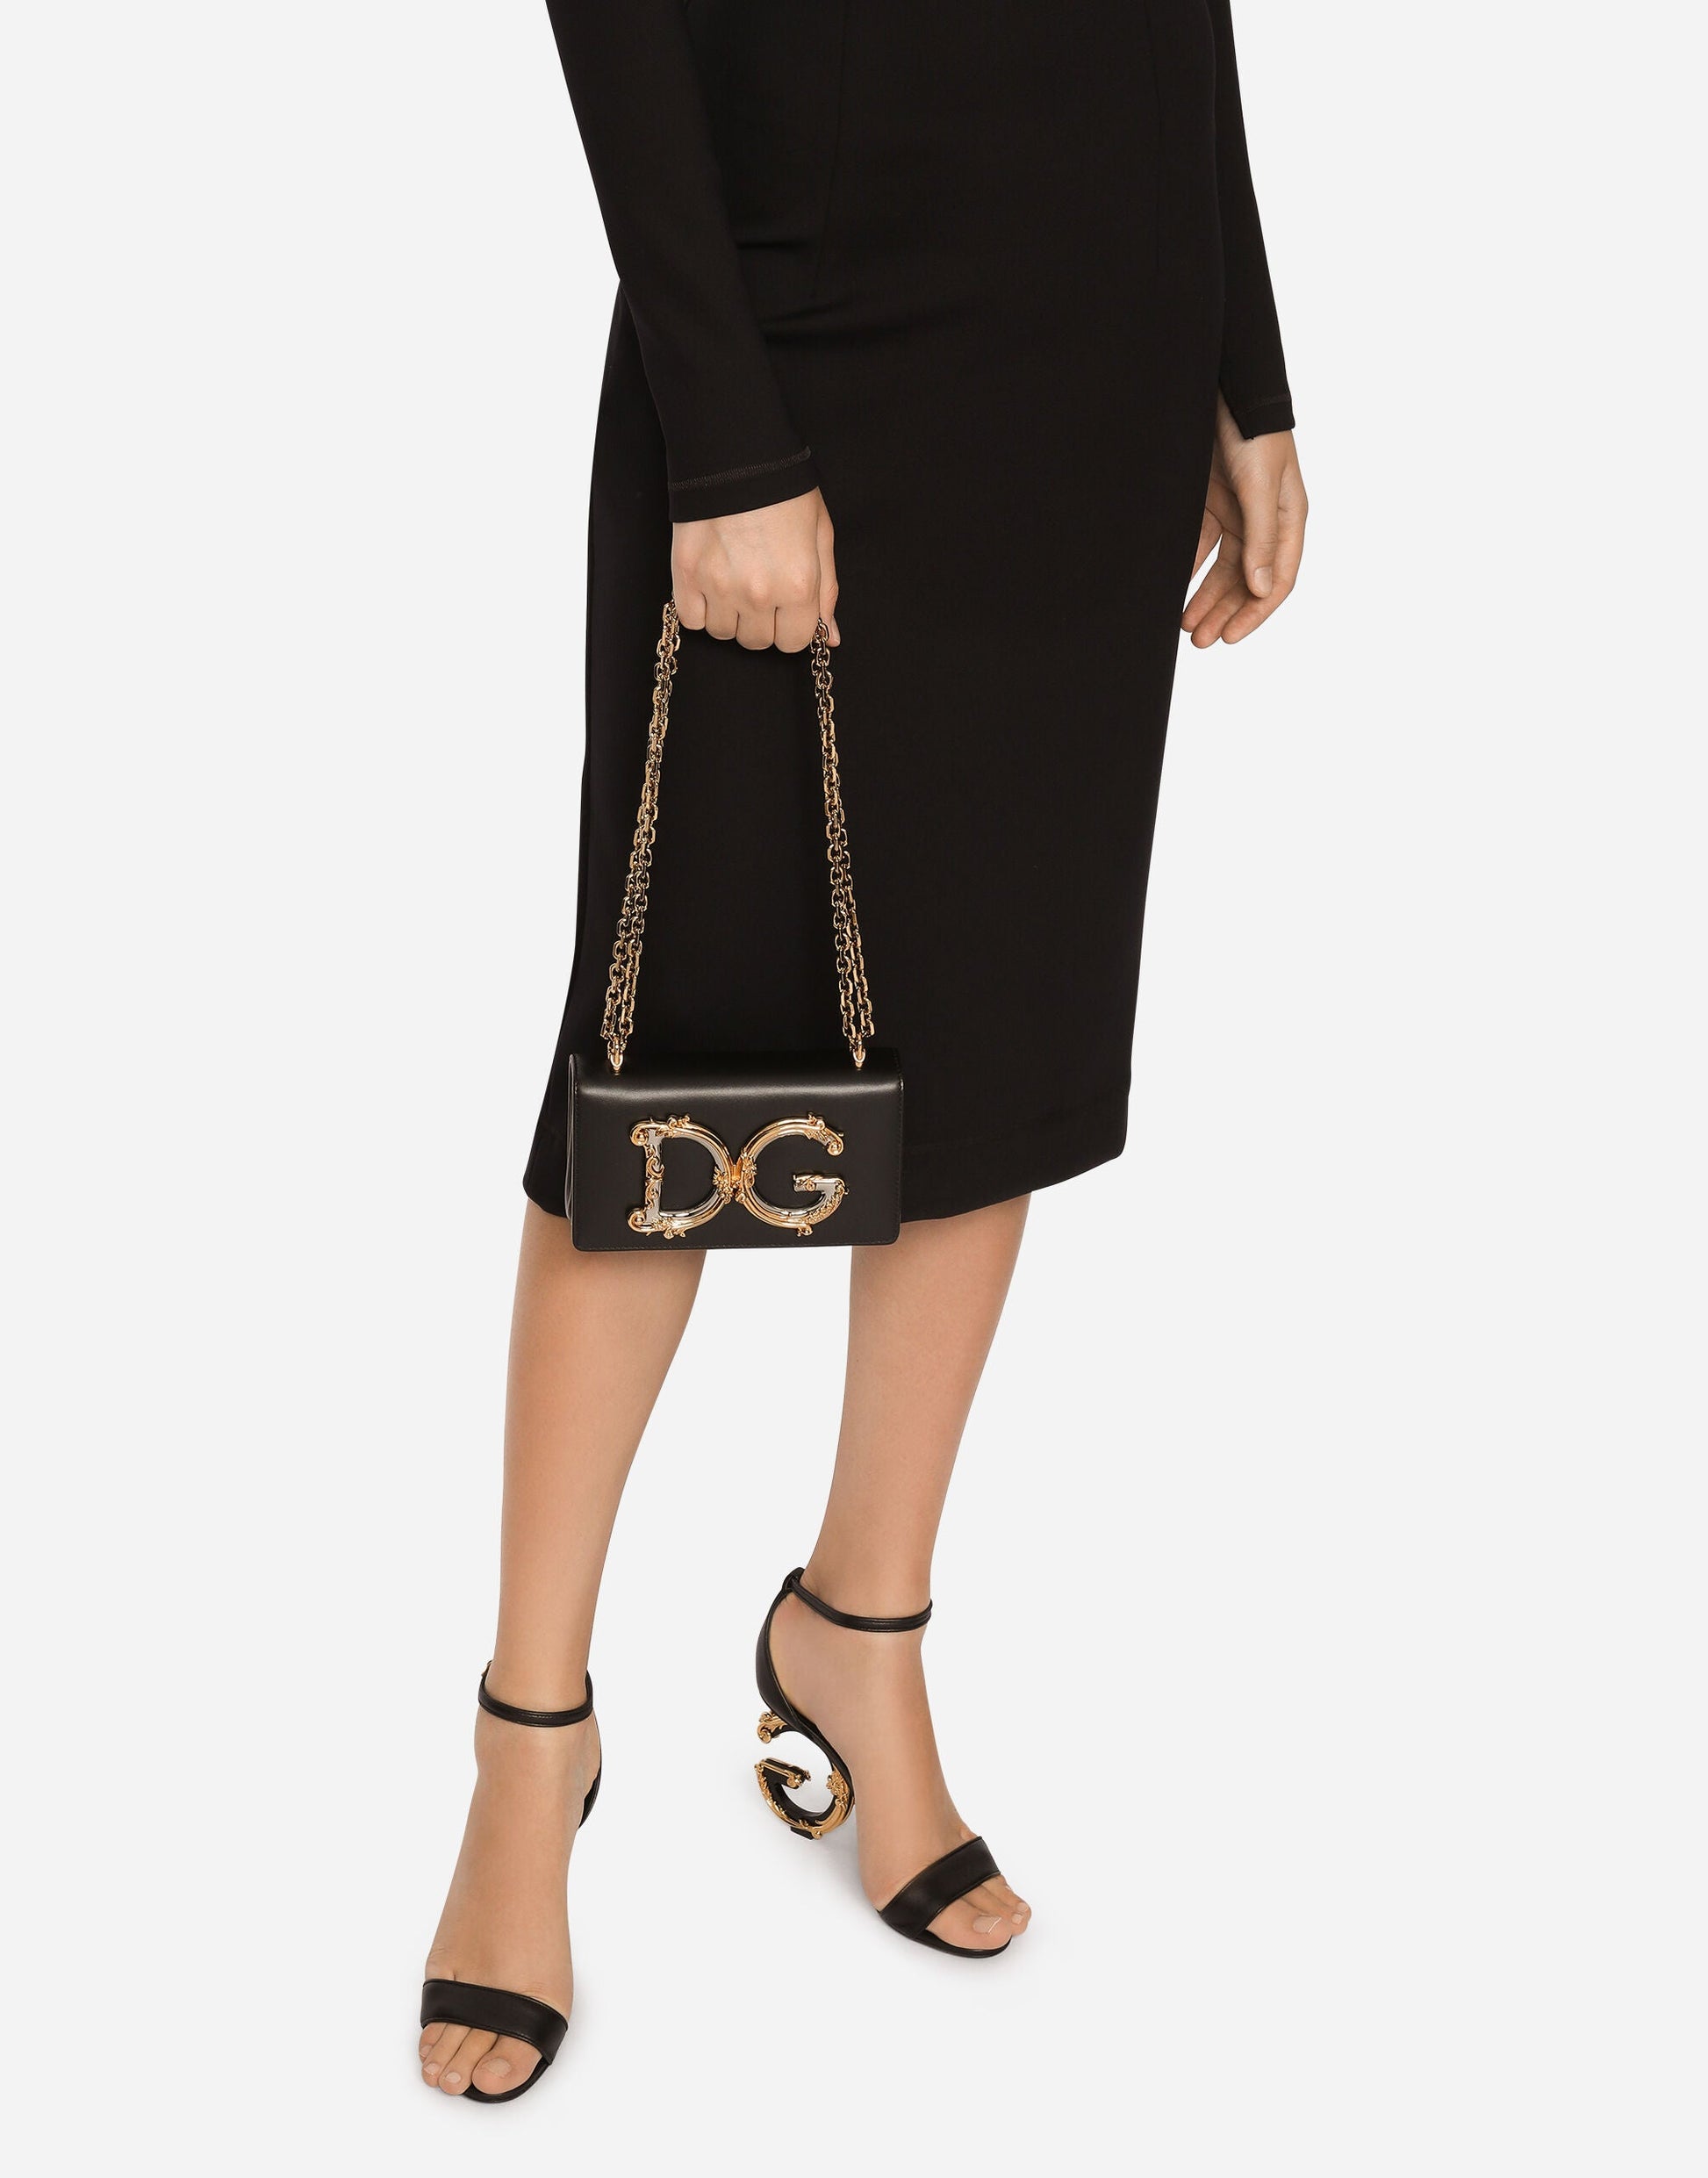 DG Girls Phone Bag in Black Handbags DOLCE & GABBANA - LOLAMIR